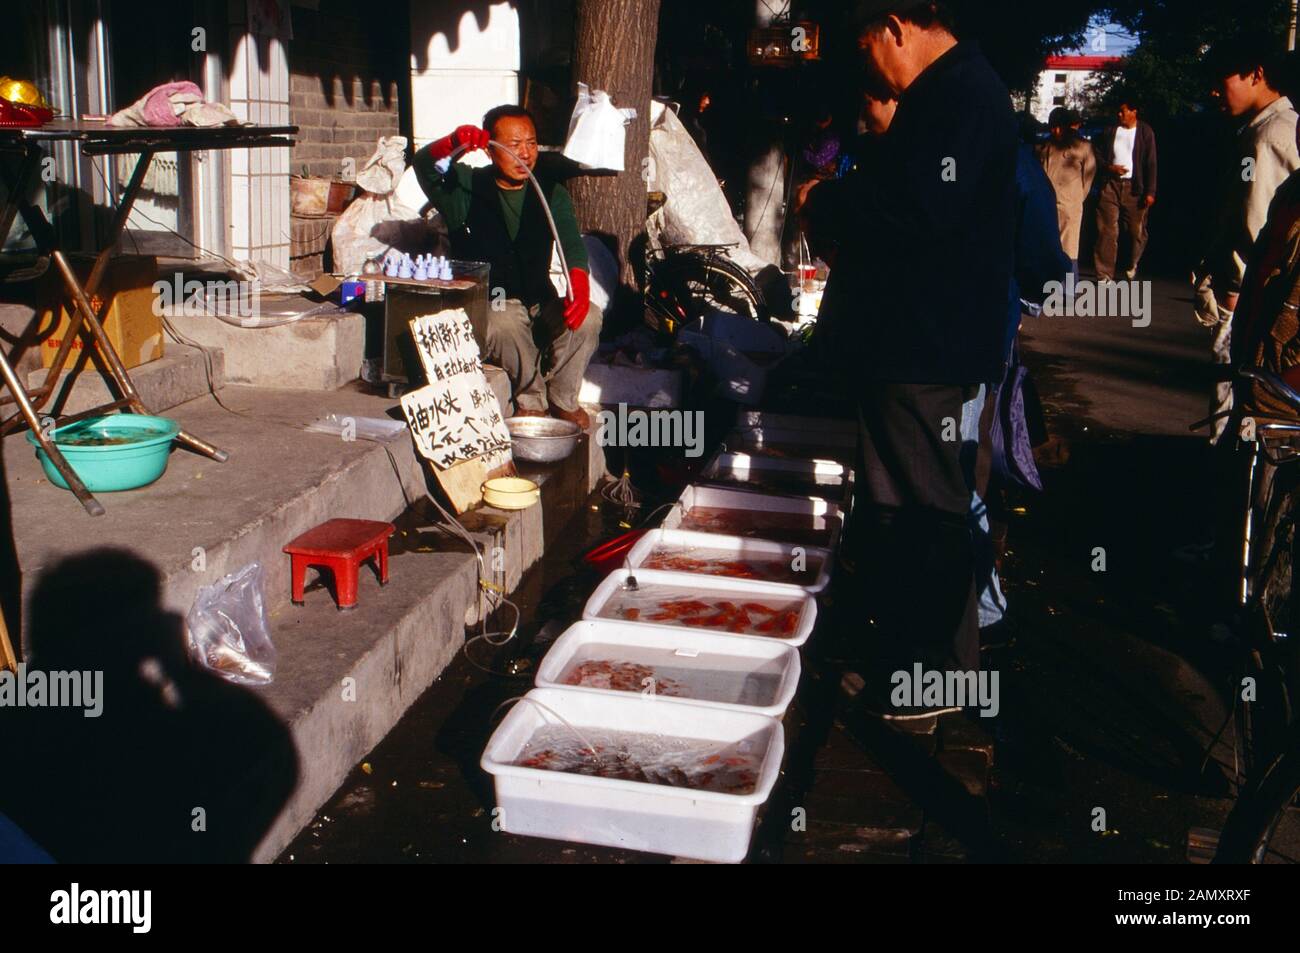 Offener Markt für Zierfische in einem Außenbezirk von Peking, China um 1990. Mercato aperto per i pesci ornamentali in una periferia di Pechino, Cina intorno al 1990. Foto Stock